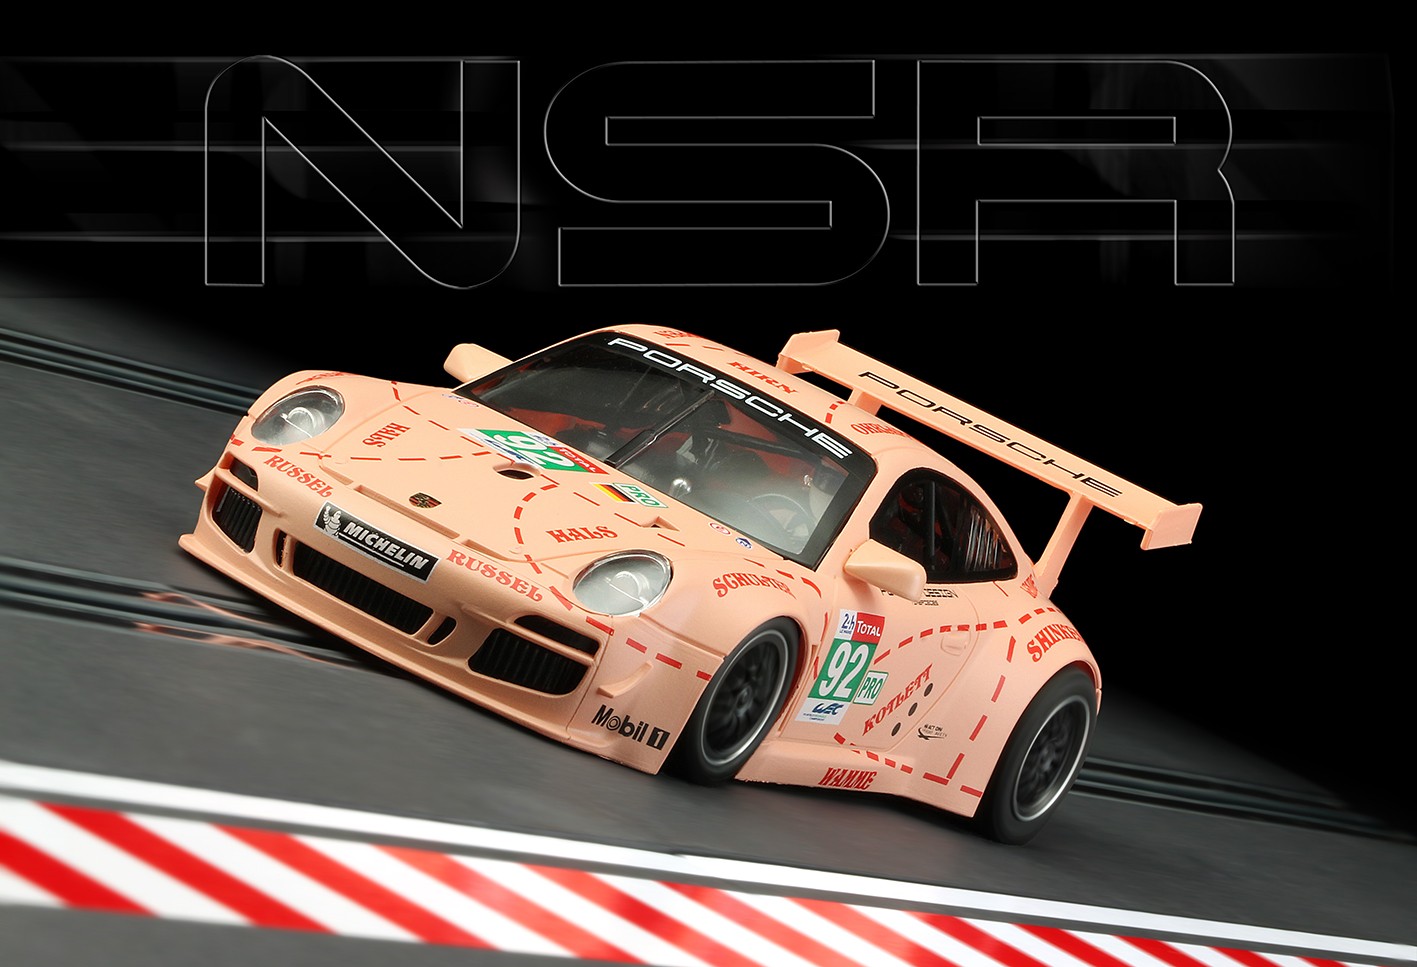 NSR - Porsche 997 GT - #92 - 0154AW - Pink Pig - Winner Pro 24h Le Mans 2018